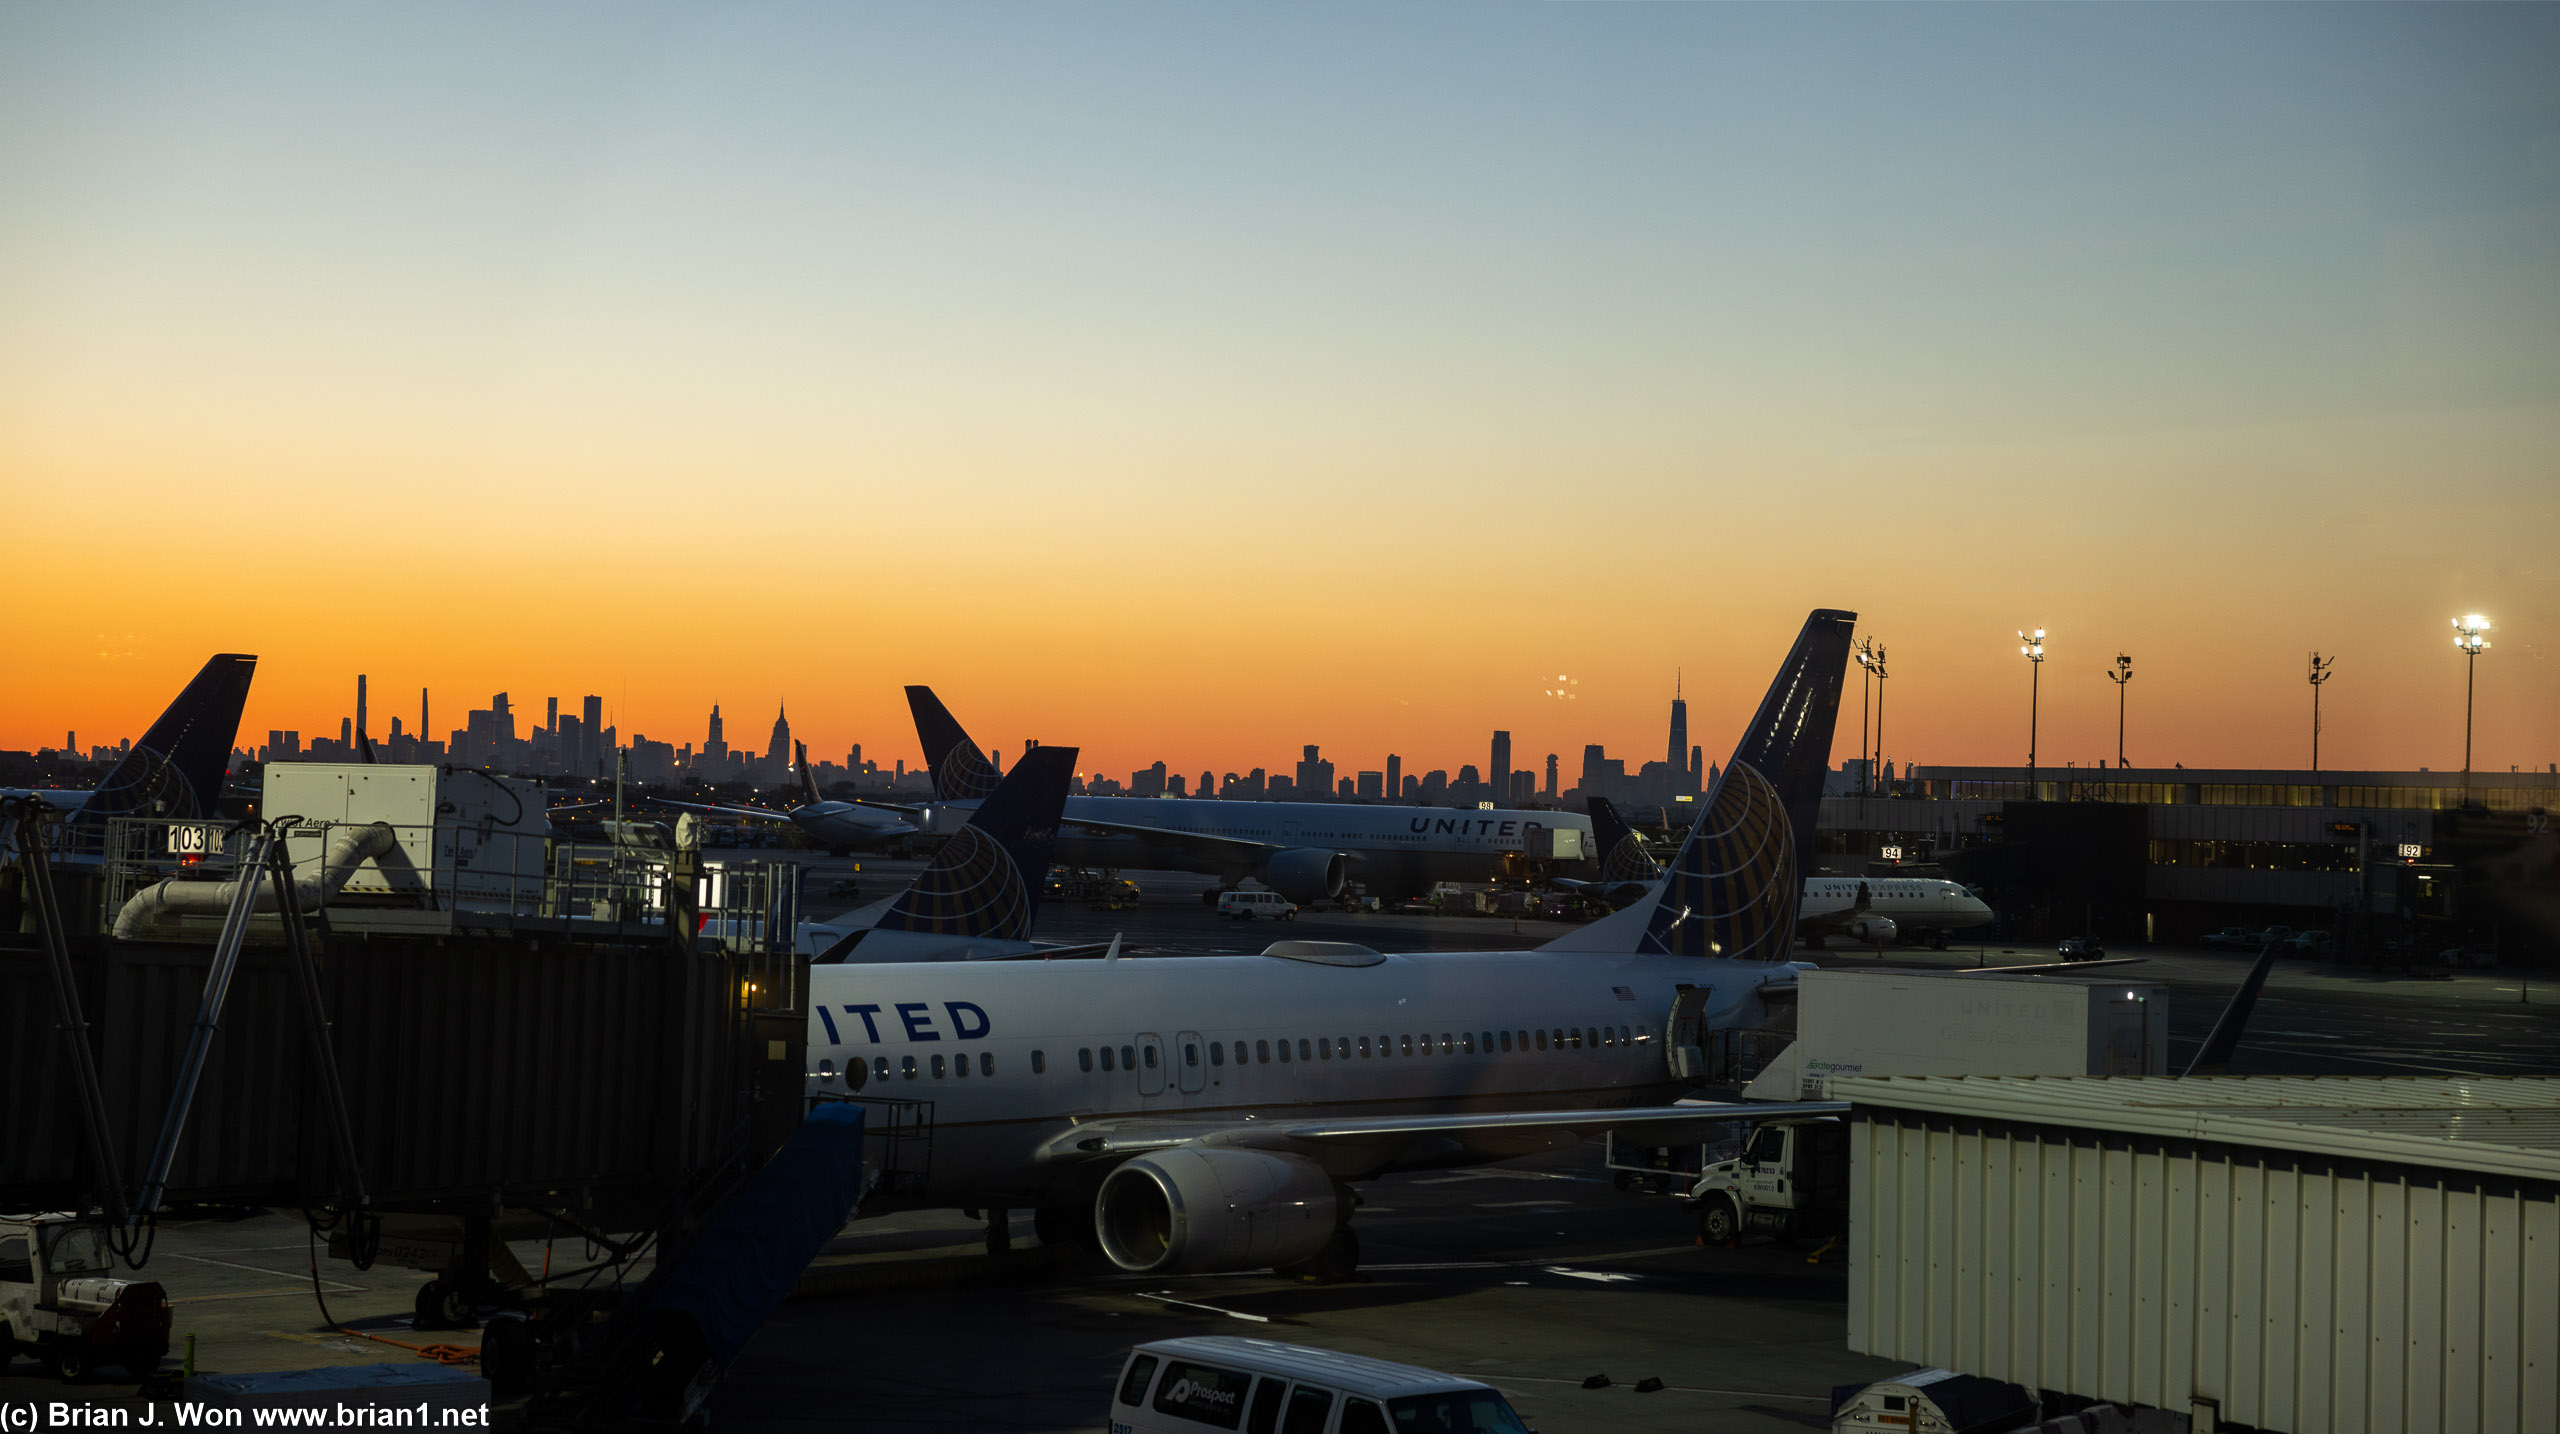 Sunrise at Newark International Airport.